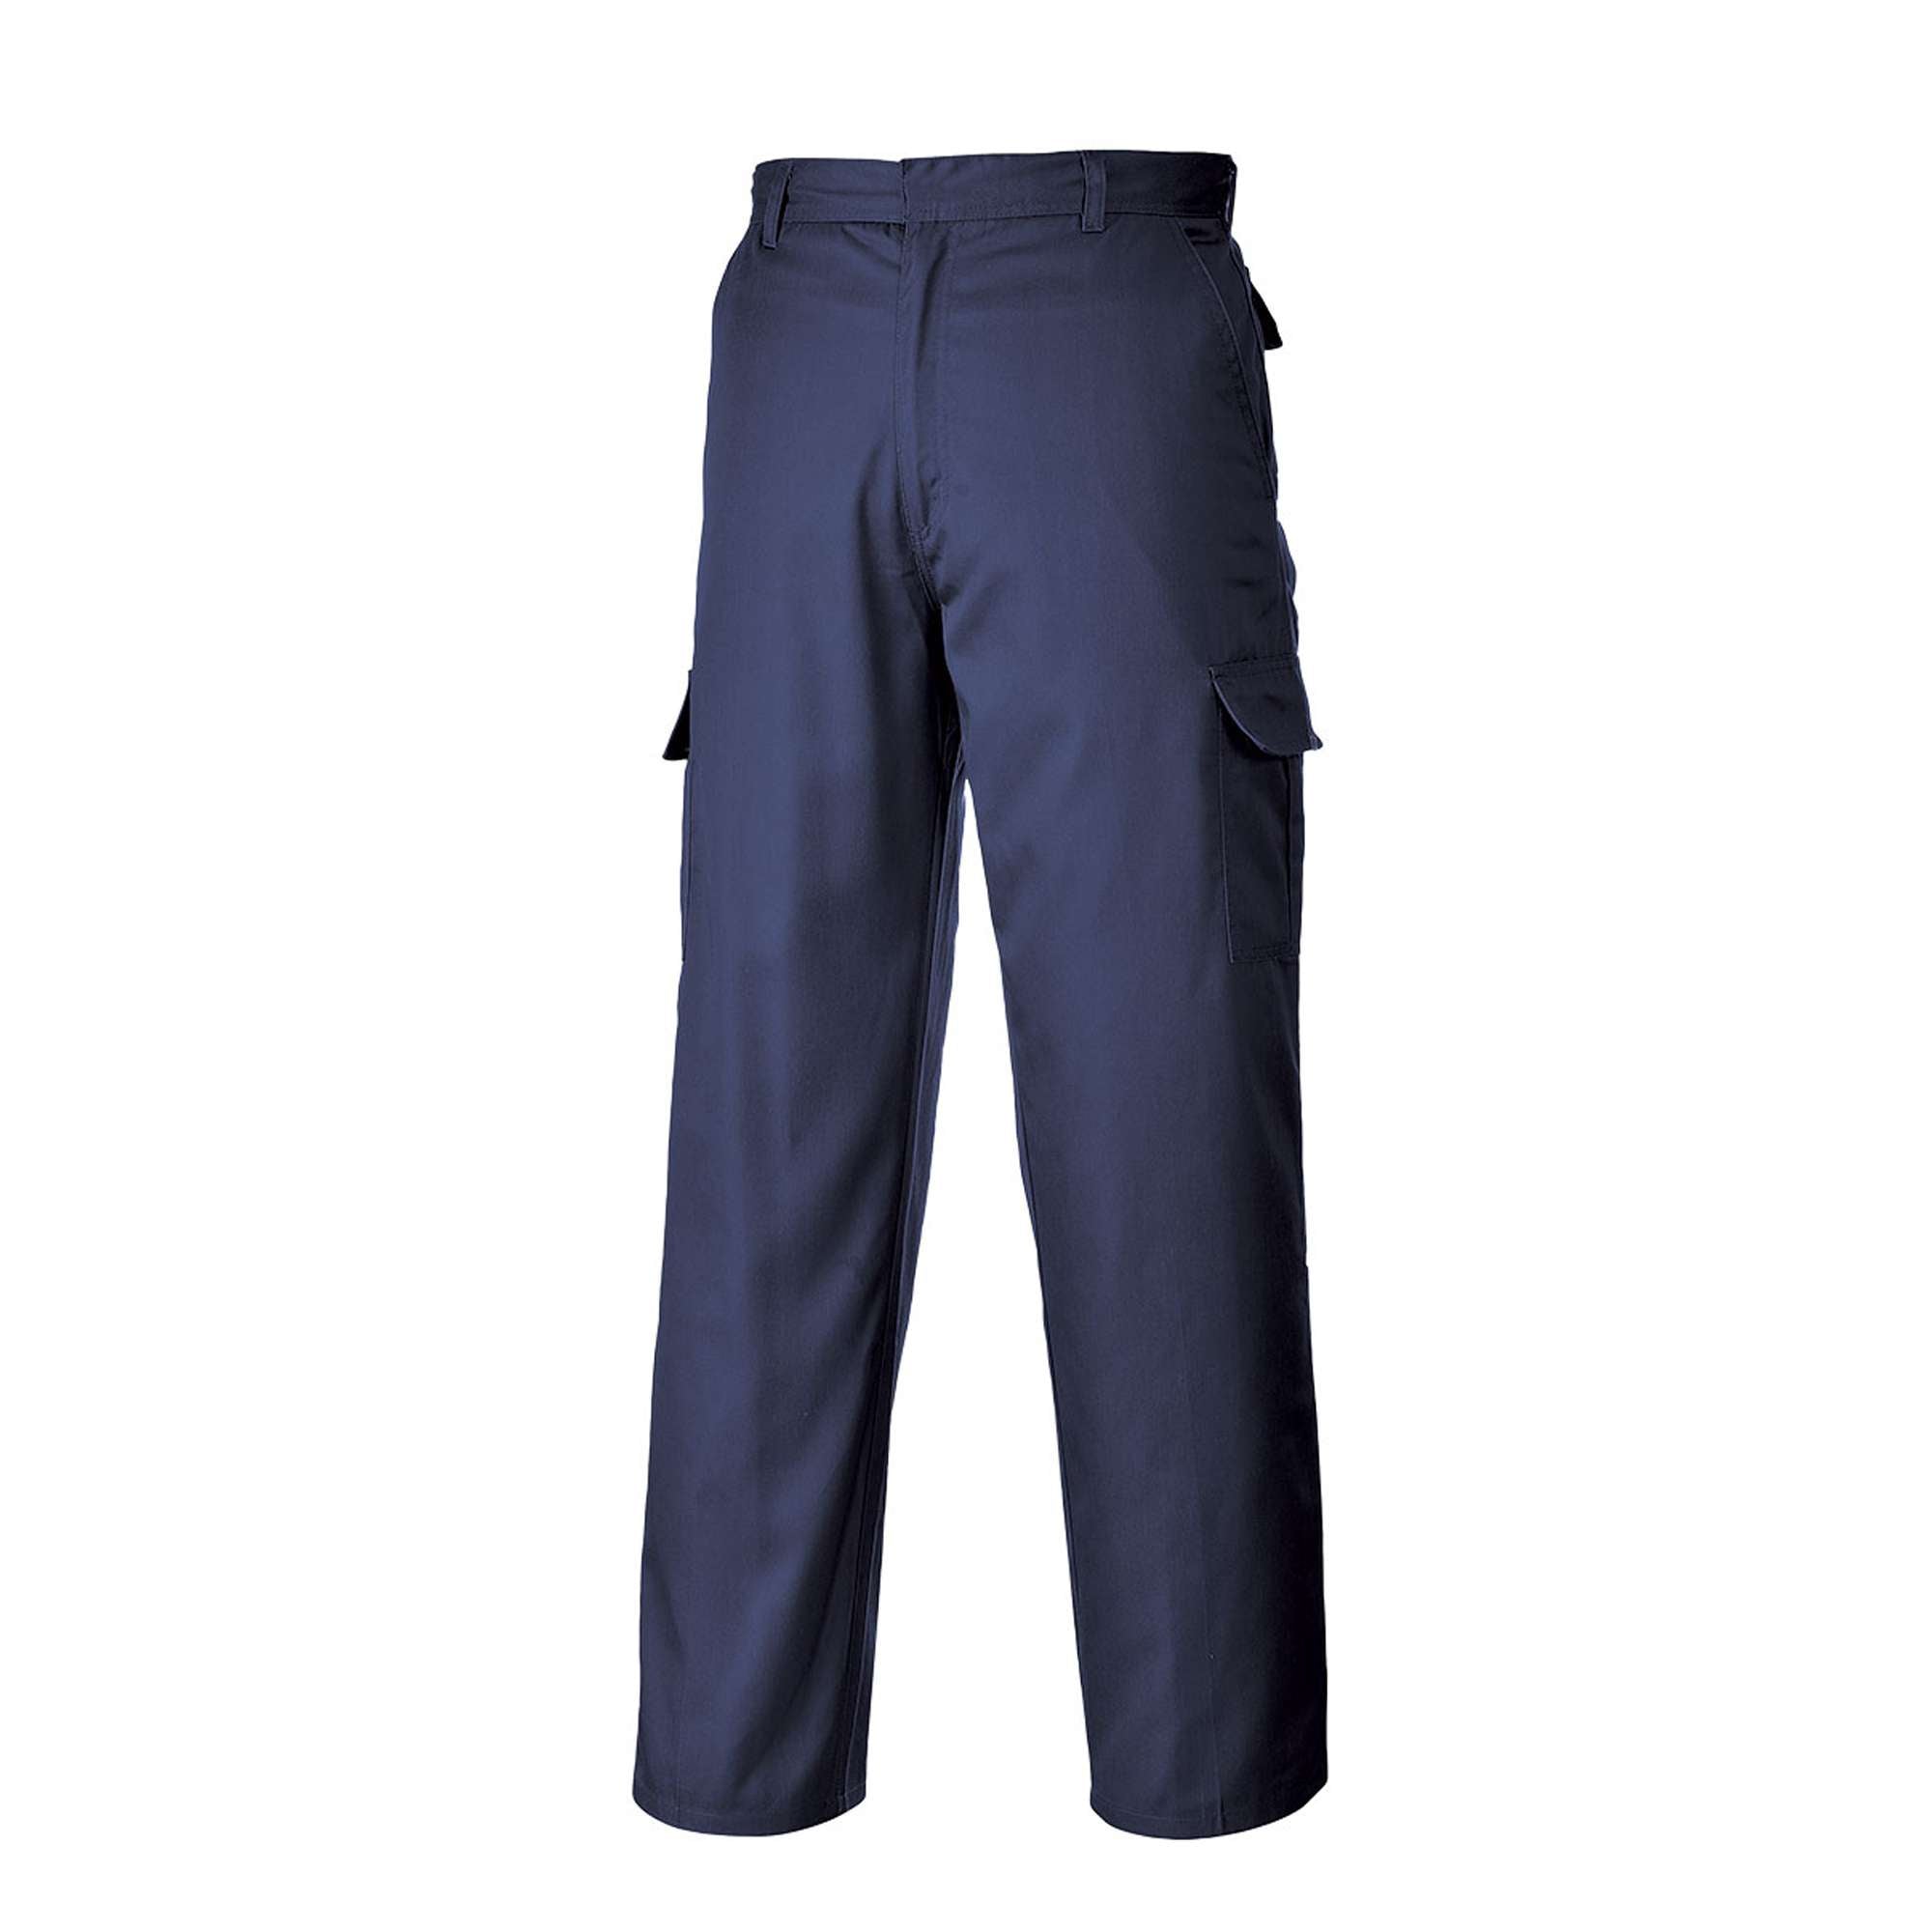 Pantaloni da lavoro blu navy tg. 44 - Portwest